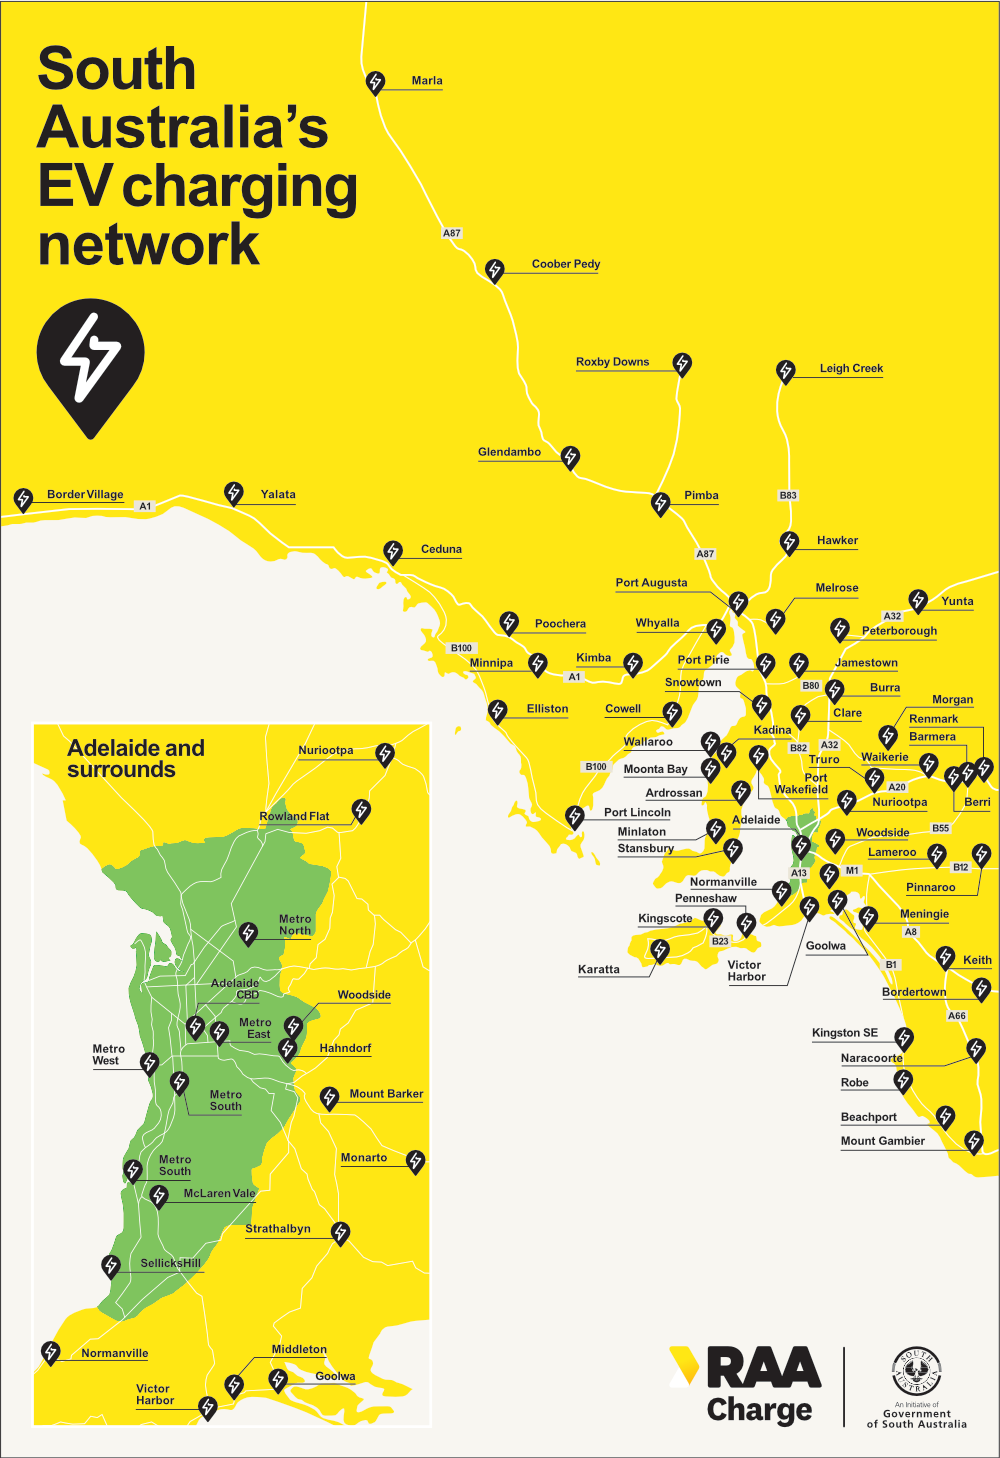 South Australia's EV charging network locations